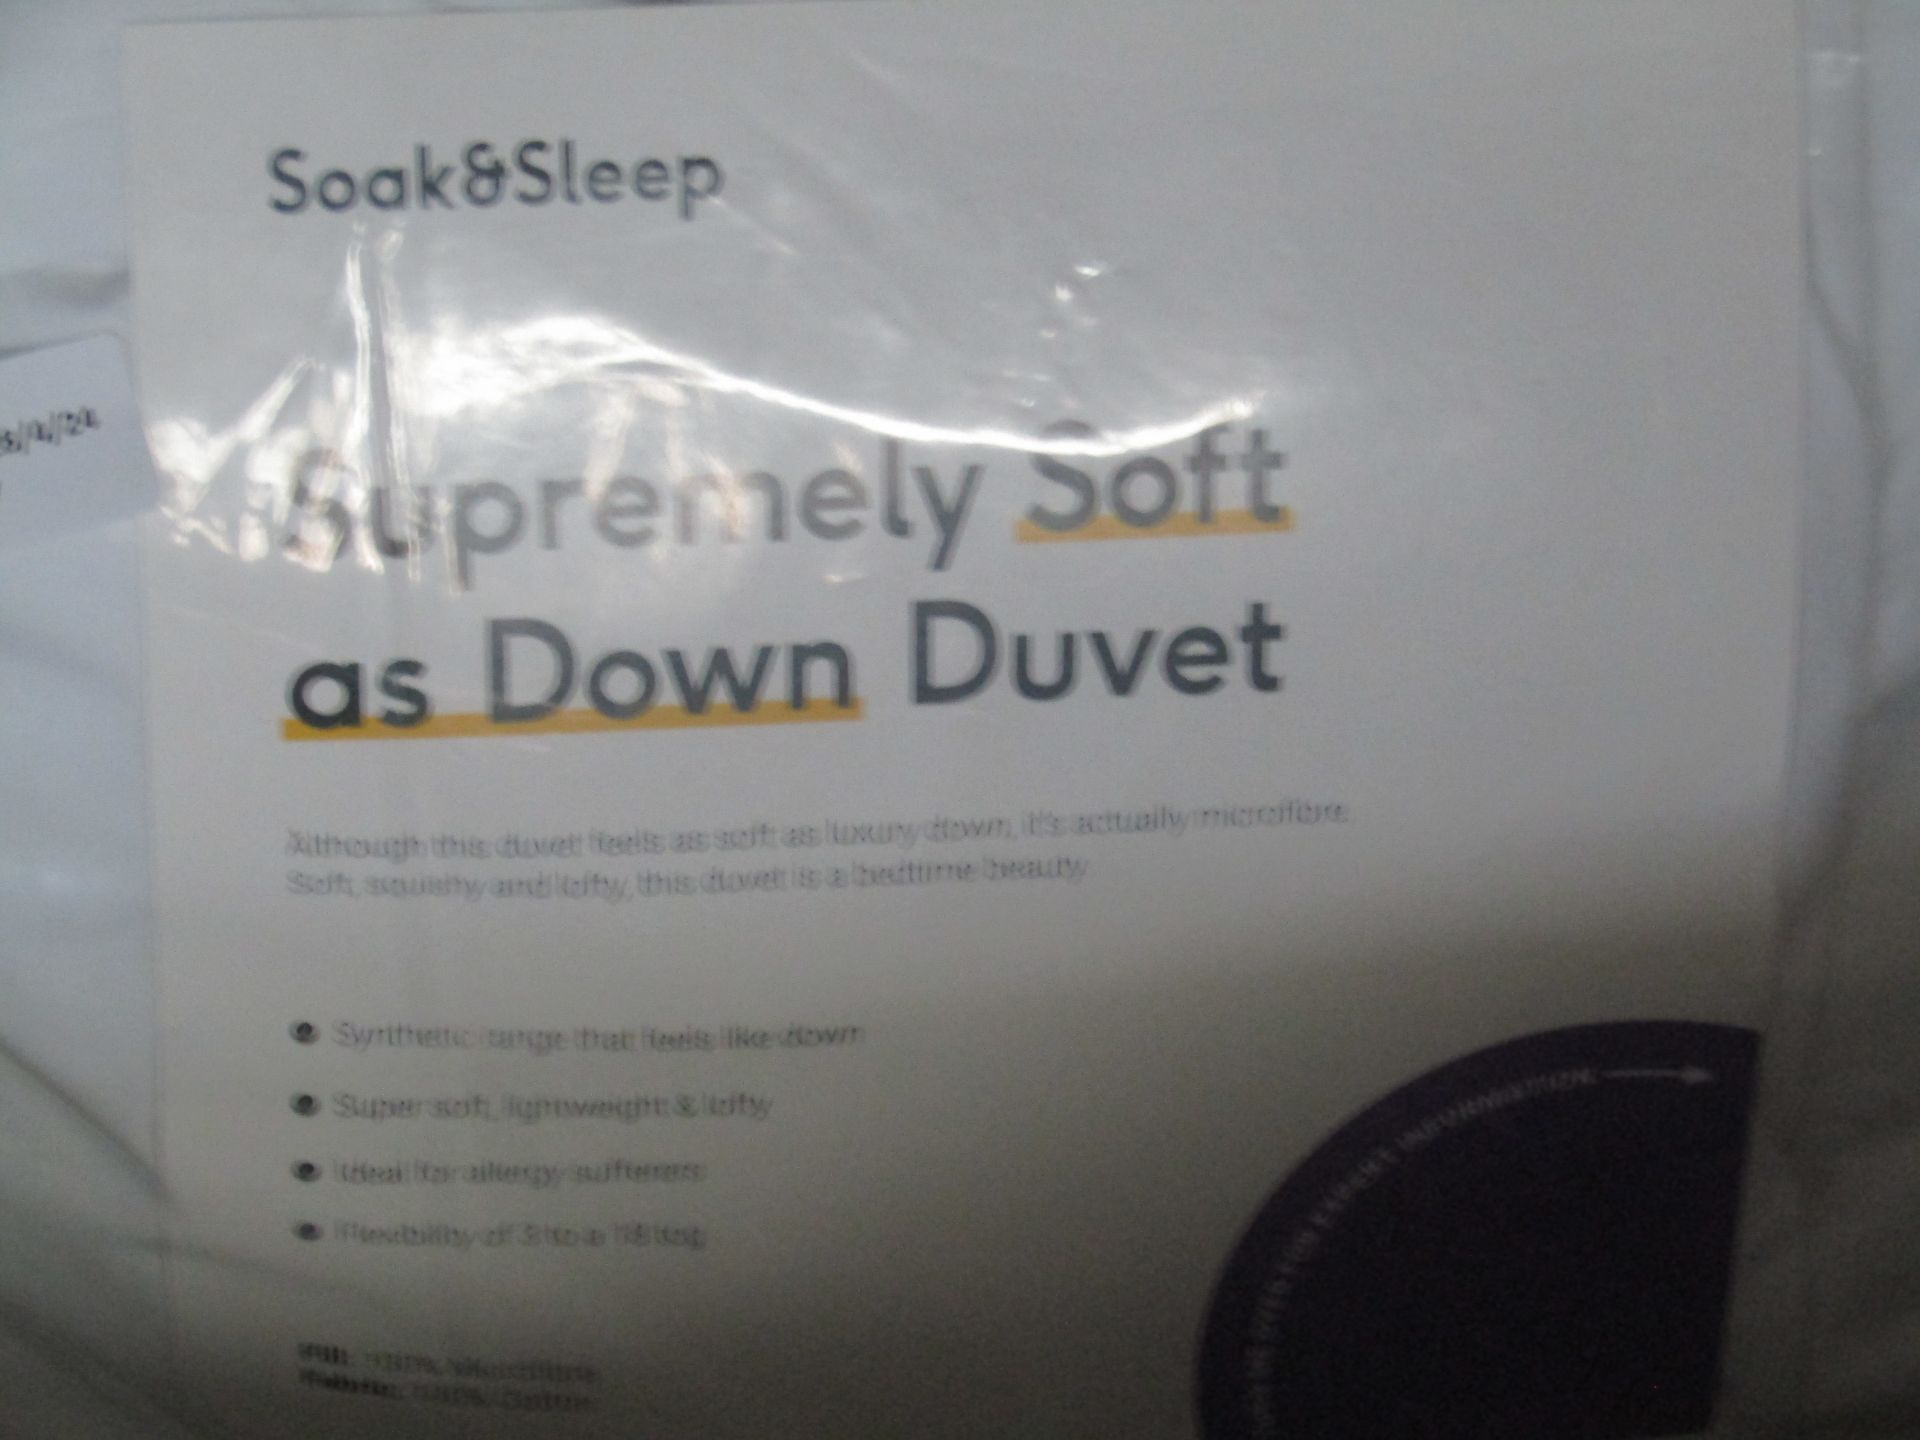 Soak & Sleep Soak & Sleep 10.5 Tog Soft As Down Microfibre Superking Duvet RRP 80About the Product(